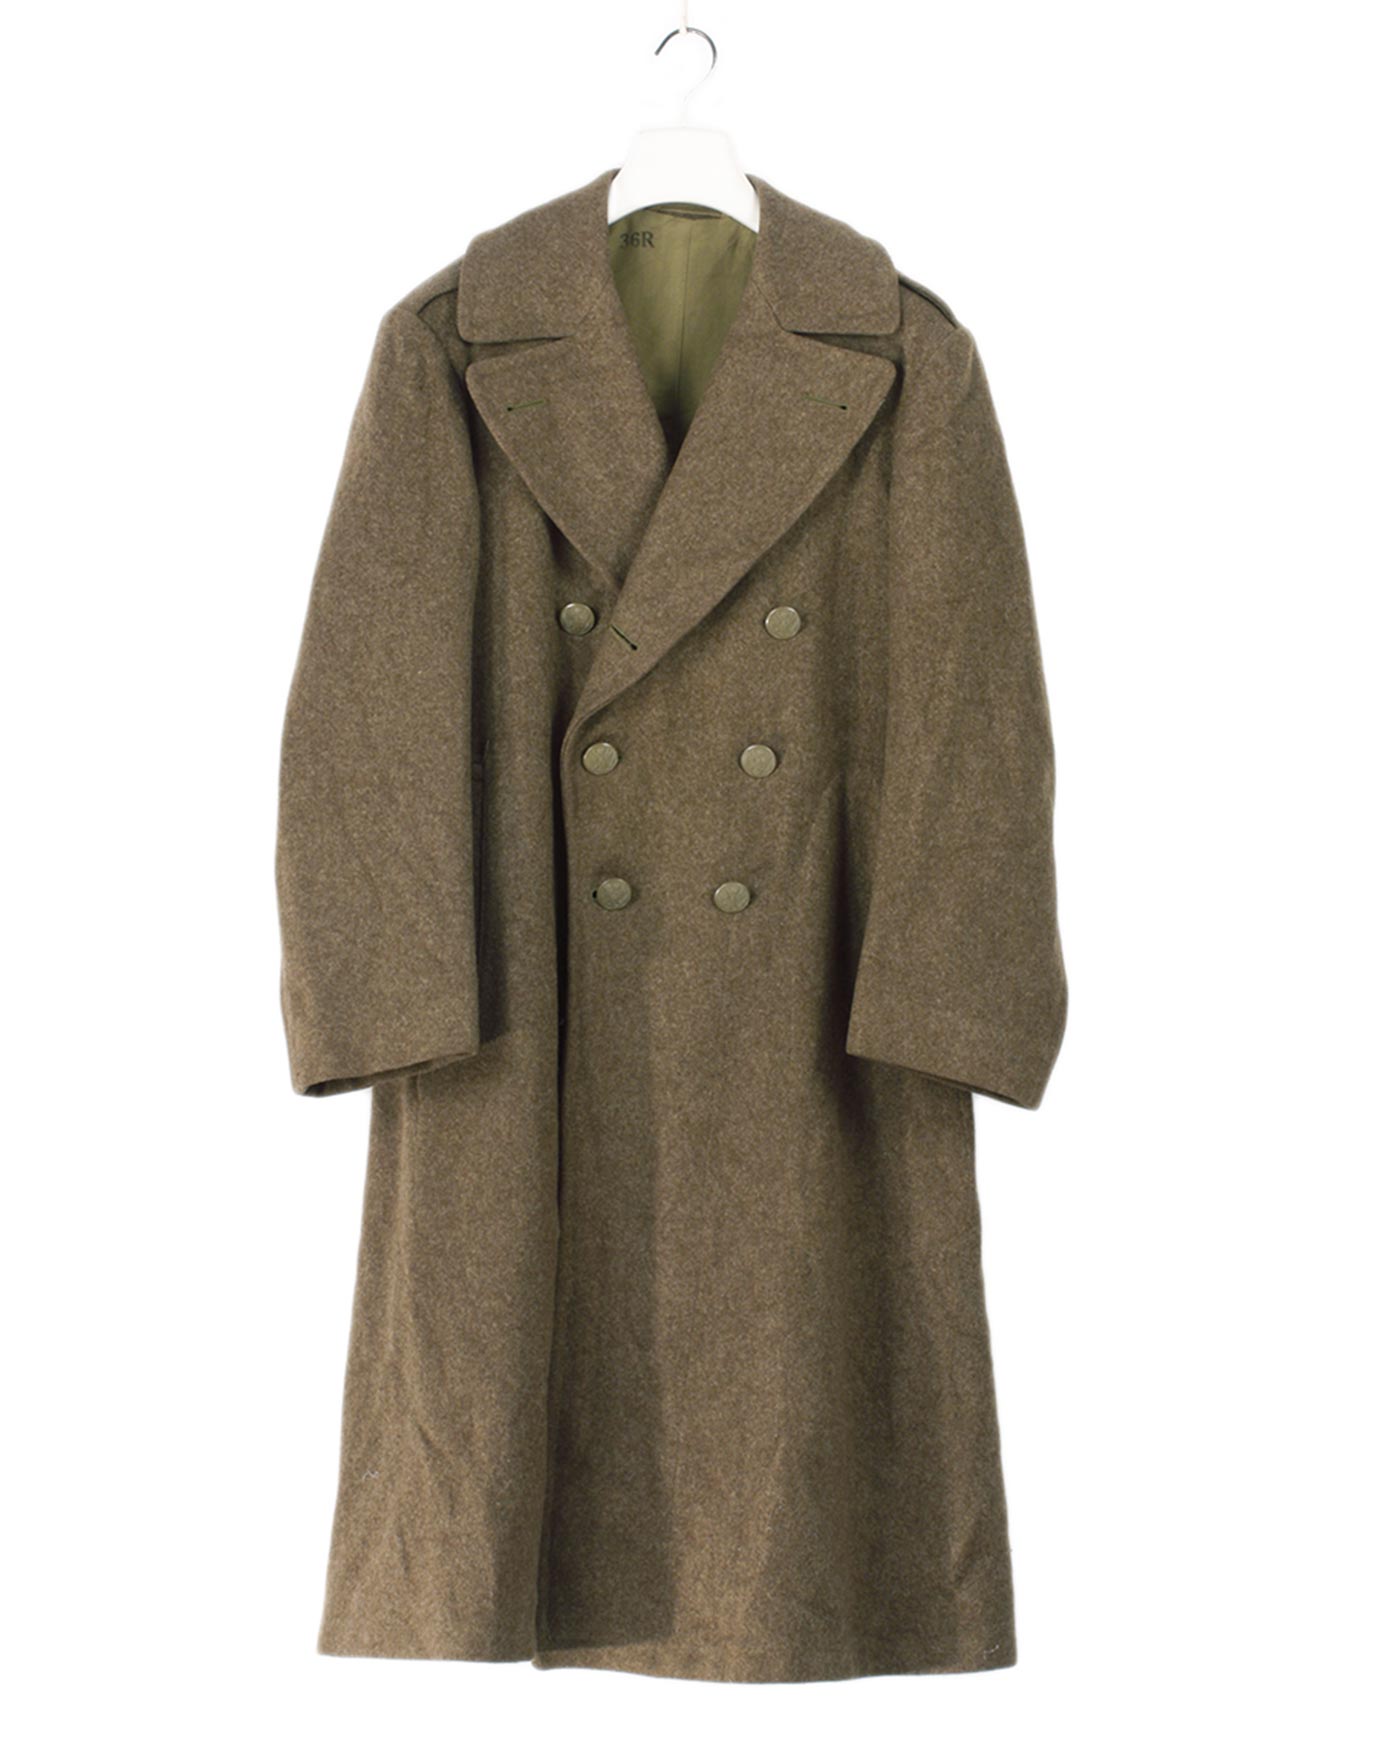 U.S.Army overcoat WWII 40s – Madeinused